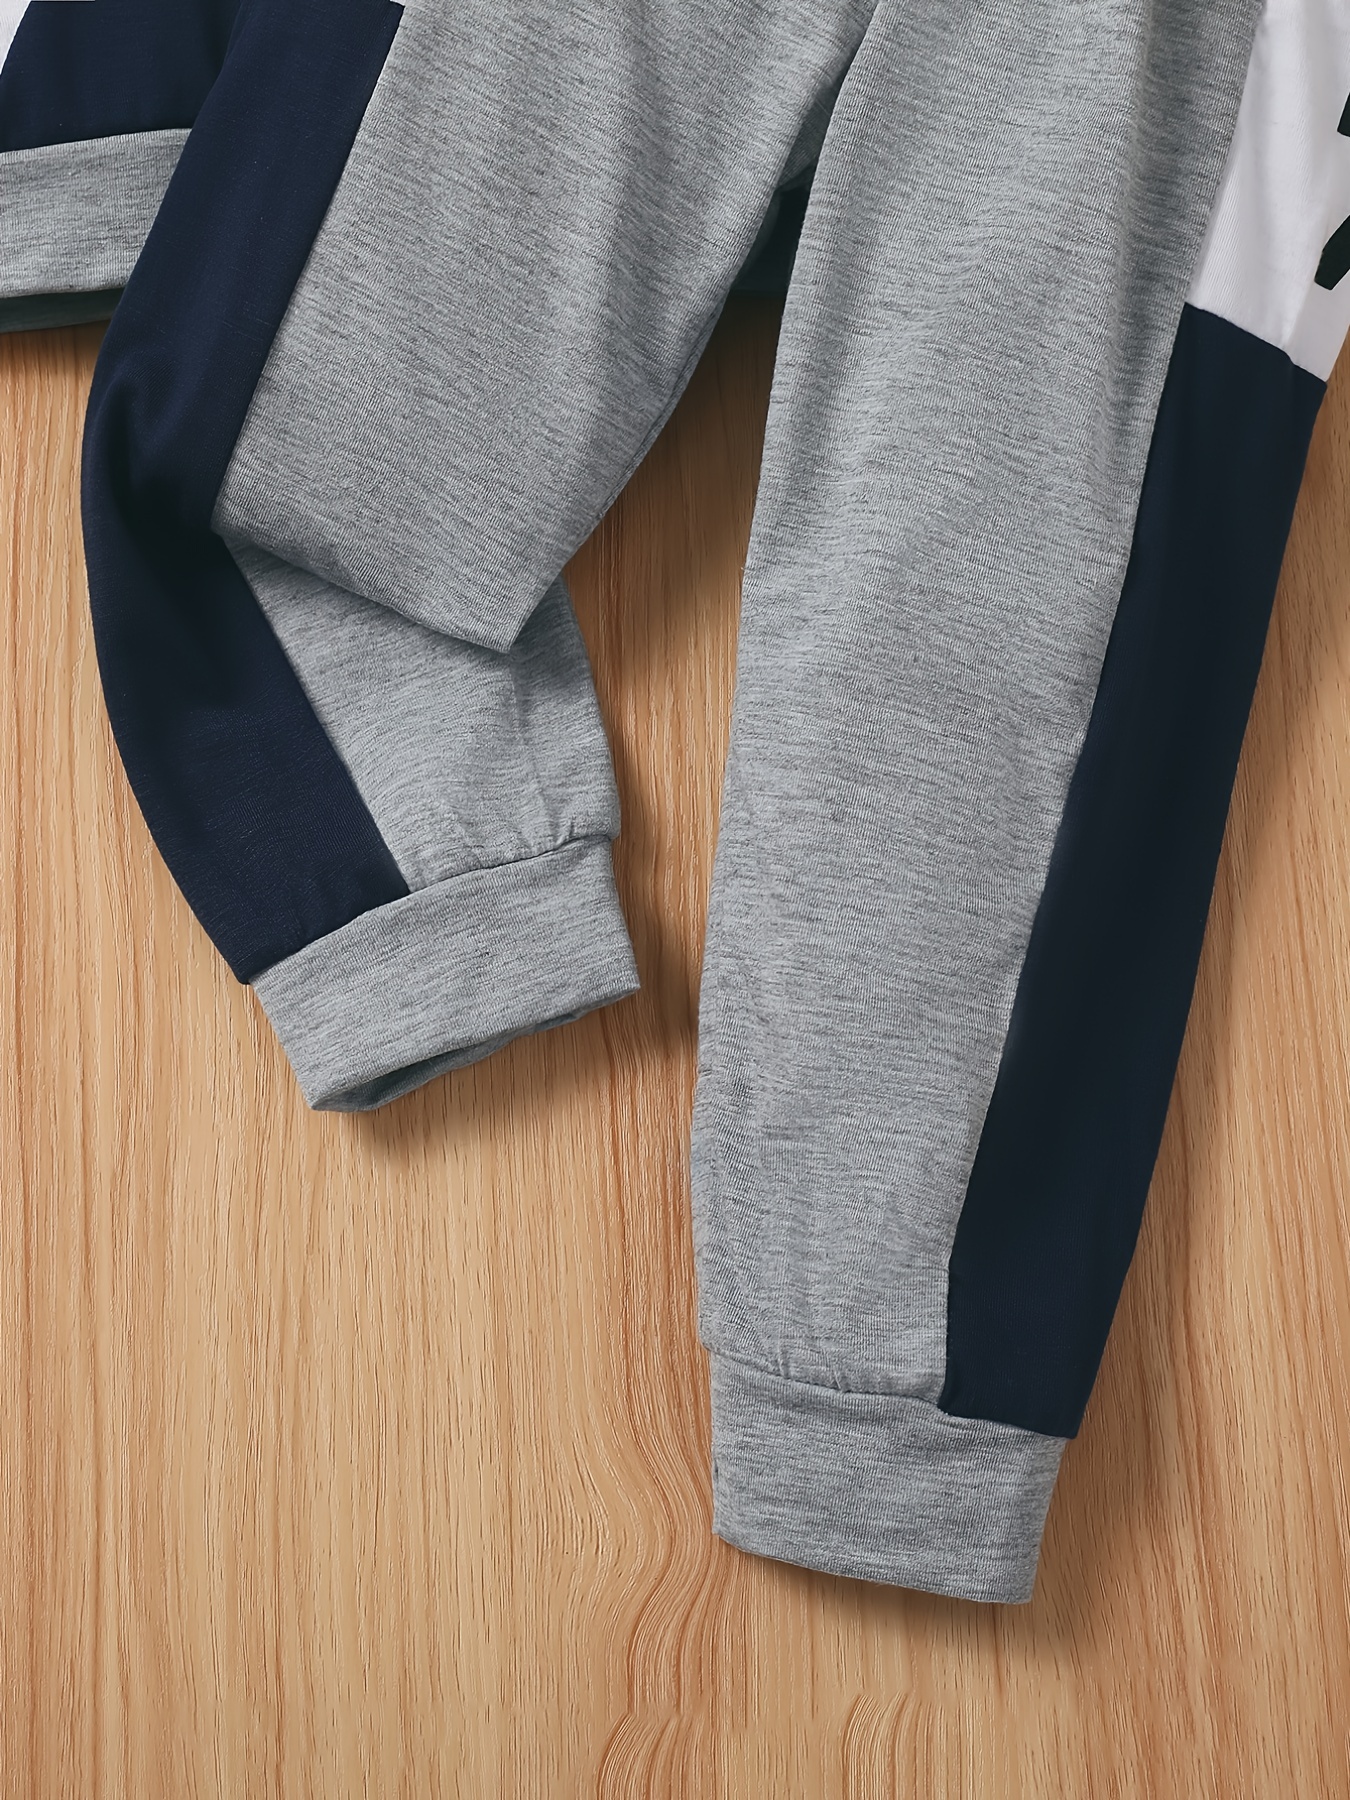 SJENG Sudadera unisex con capucha y pantalones deportivos para niños,  sudadera de manga larga con capucha para niños de 2 a 14 años (6 colores)